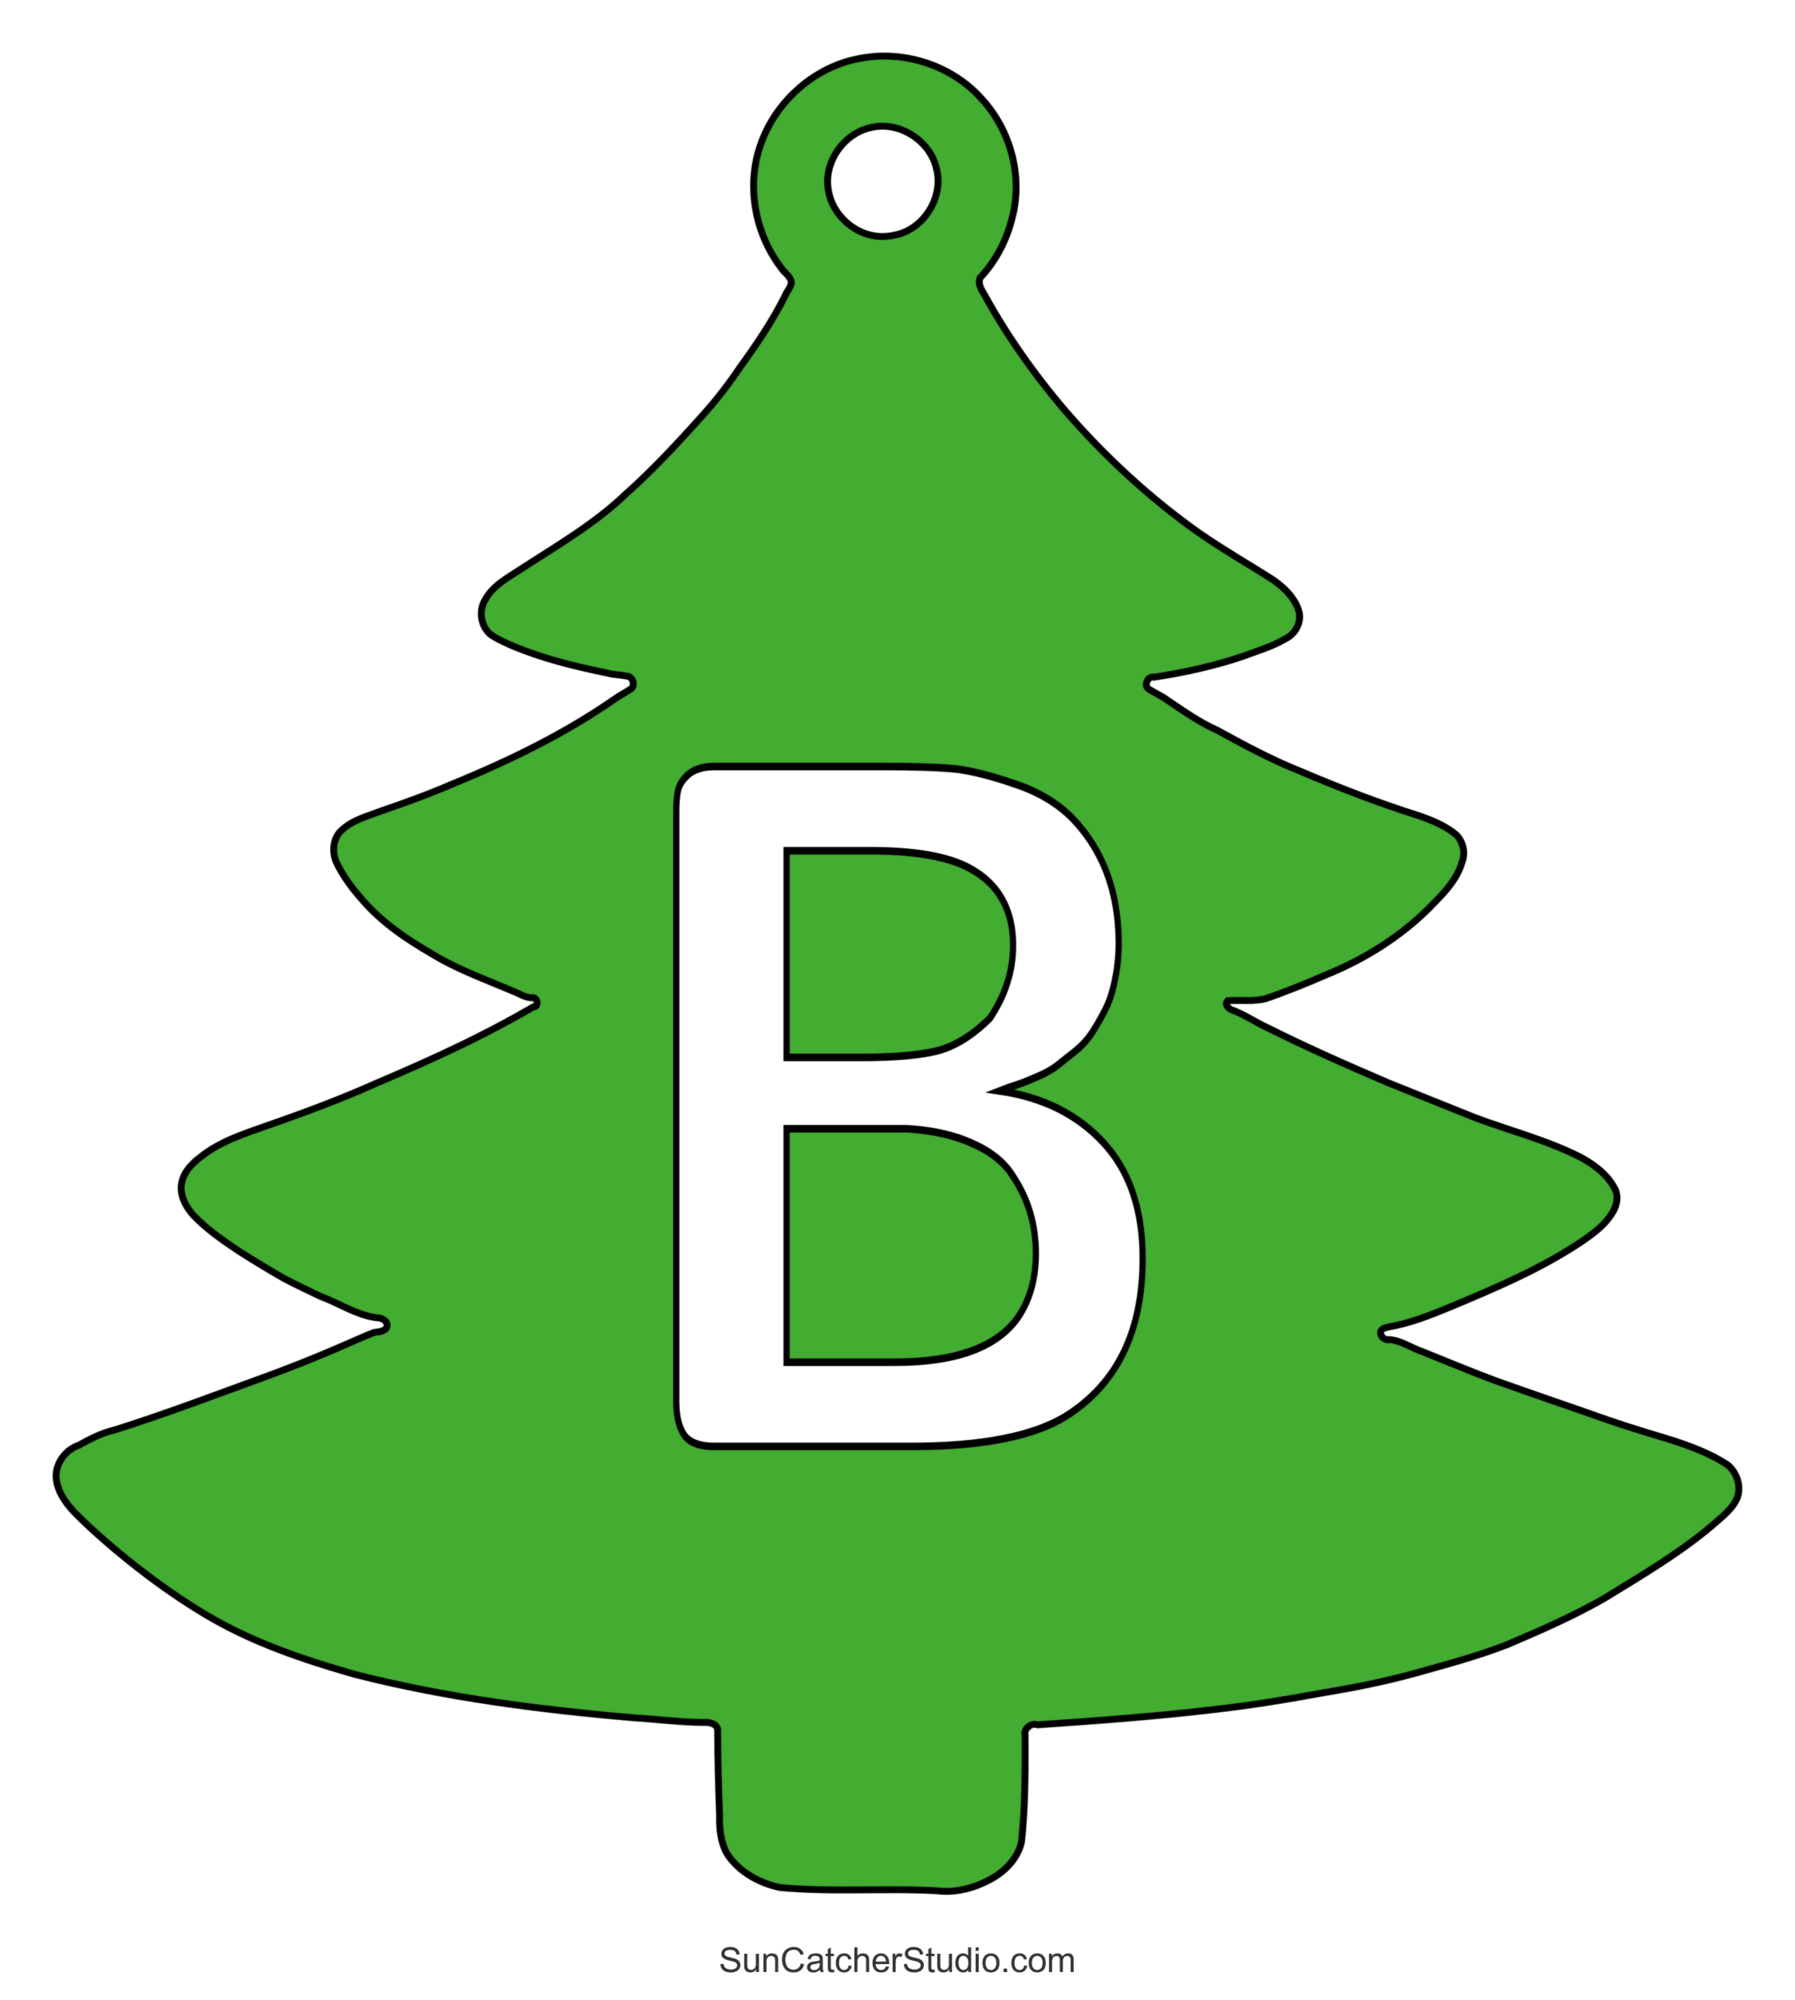 https://suncatcherstudio.com/uploads/lettering-fonts/christmas-tree-stencils/pdf-png/christmas-tree-stencil-letter-b-fefefe-44aa33.png